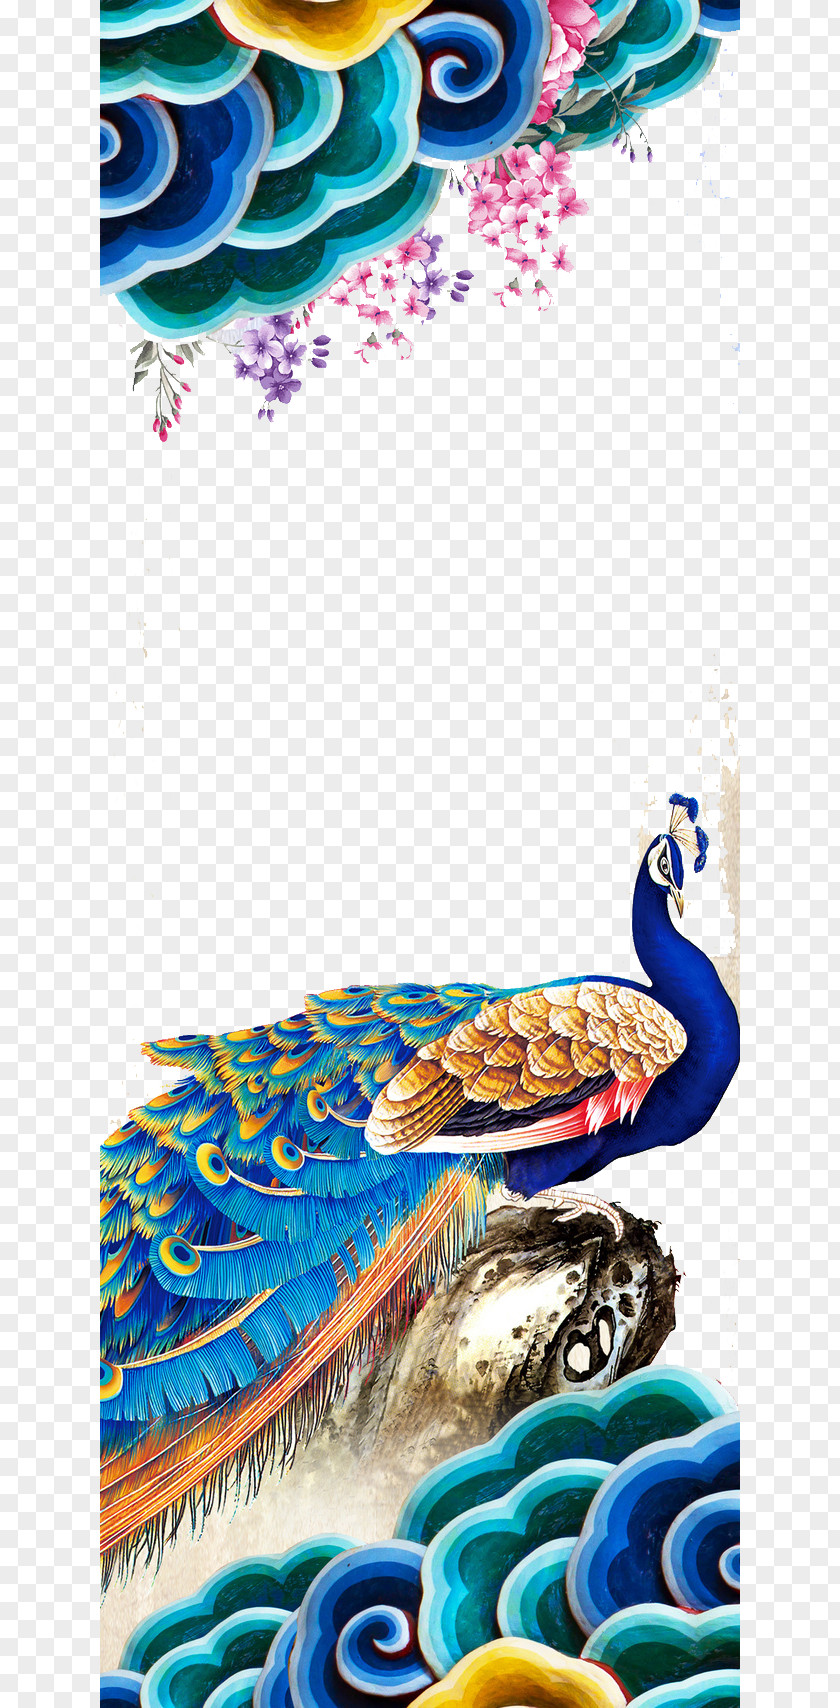 Clouds Peacock Pattern Peafowl Pantone: Colors Bird Tail PNG